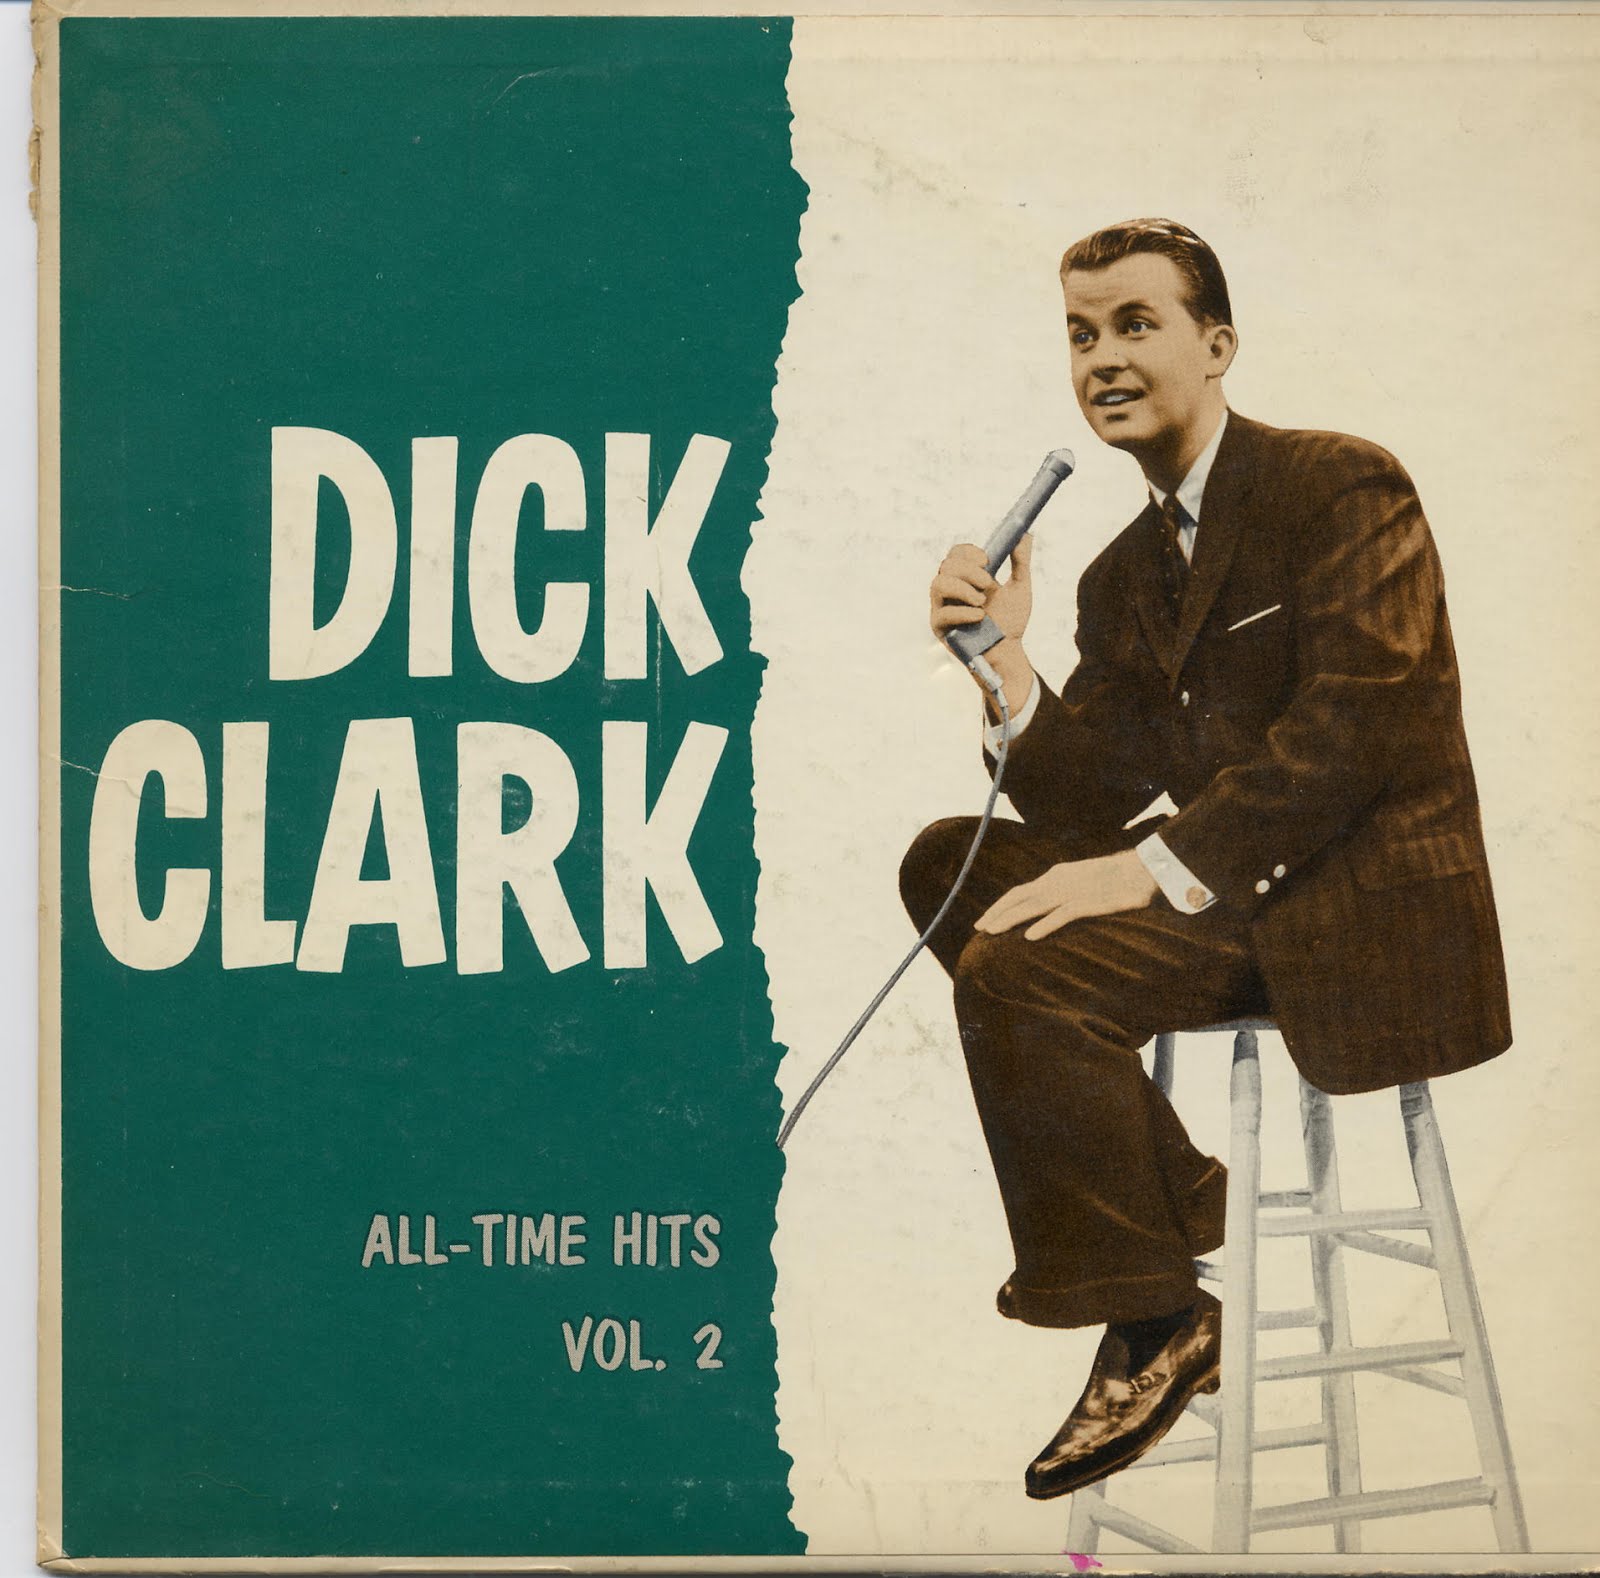 Dick clark greatest hits